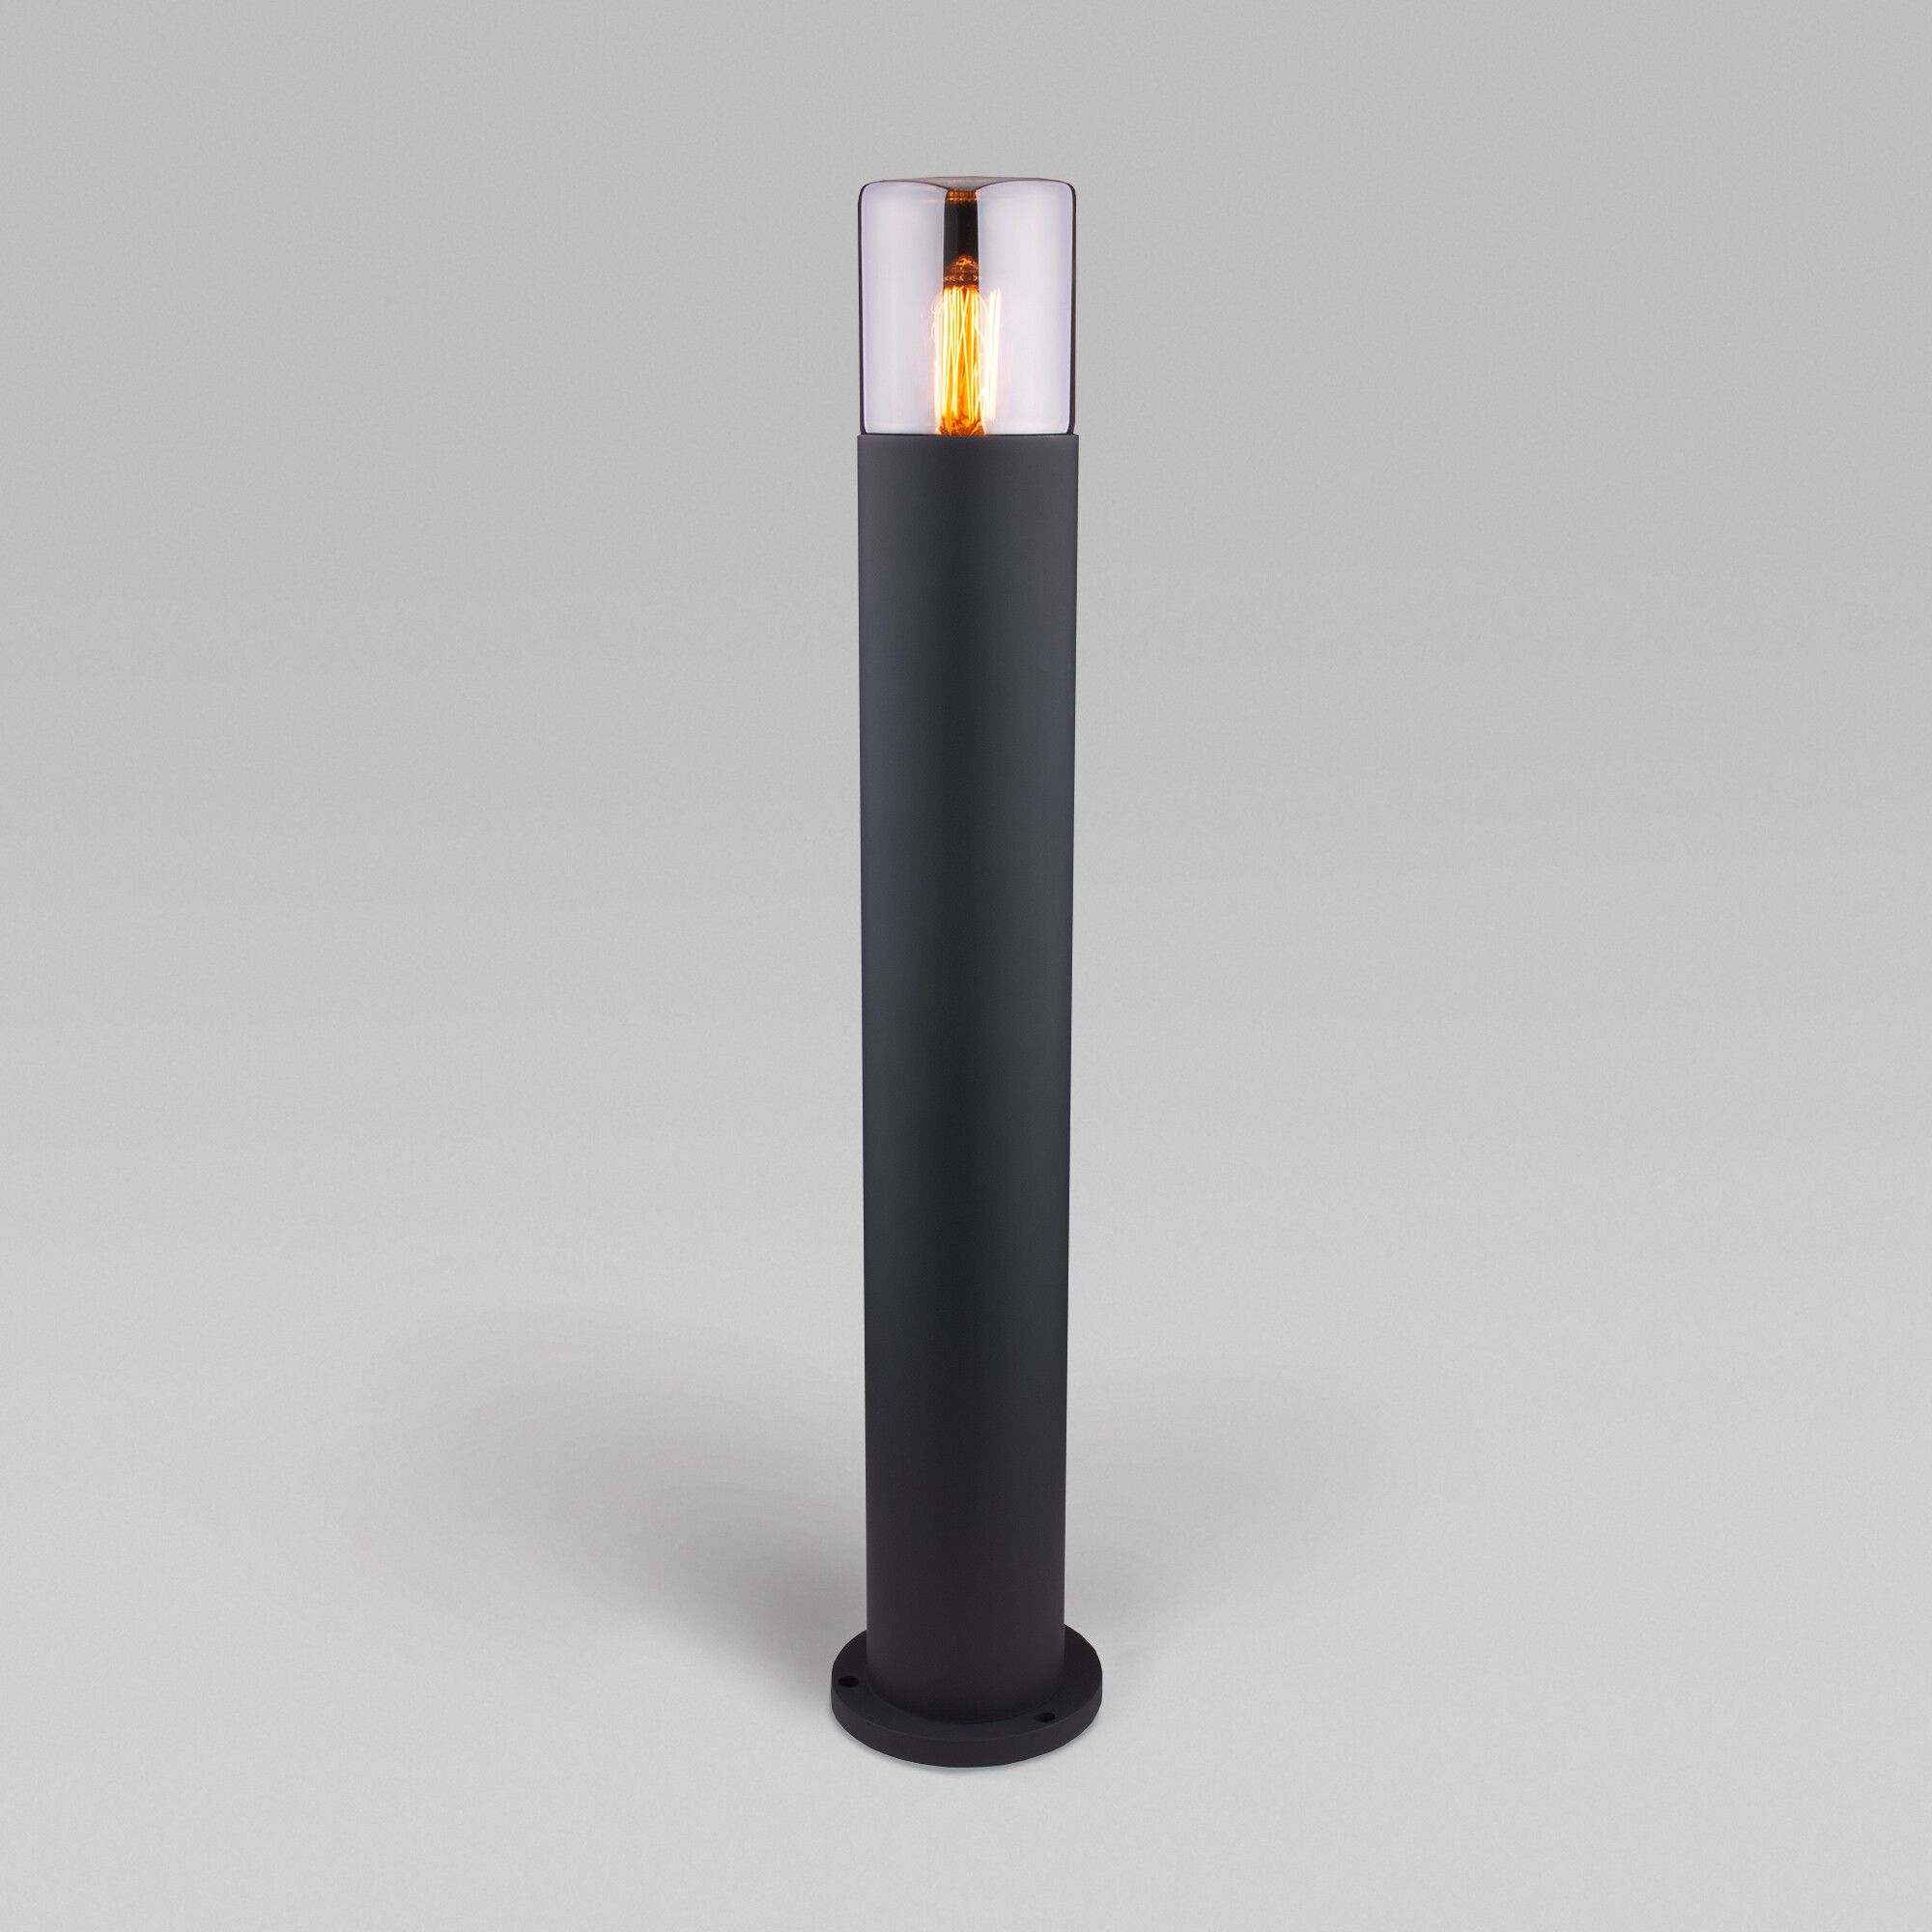 Ландшафтный светильник Roil IP54 чёрный/дымчатый плафон 35125/F Elektrostandard